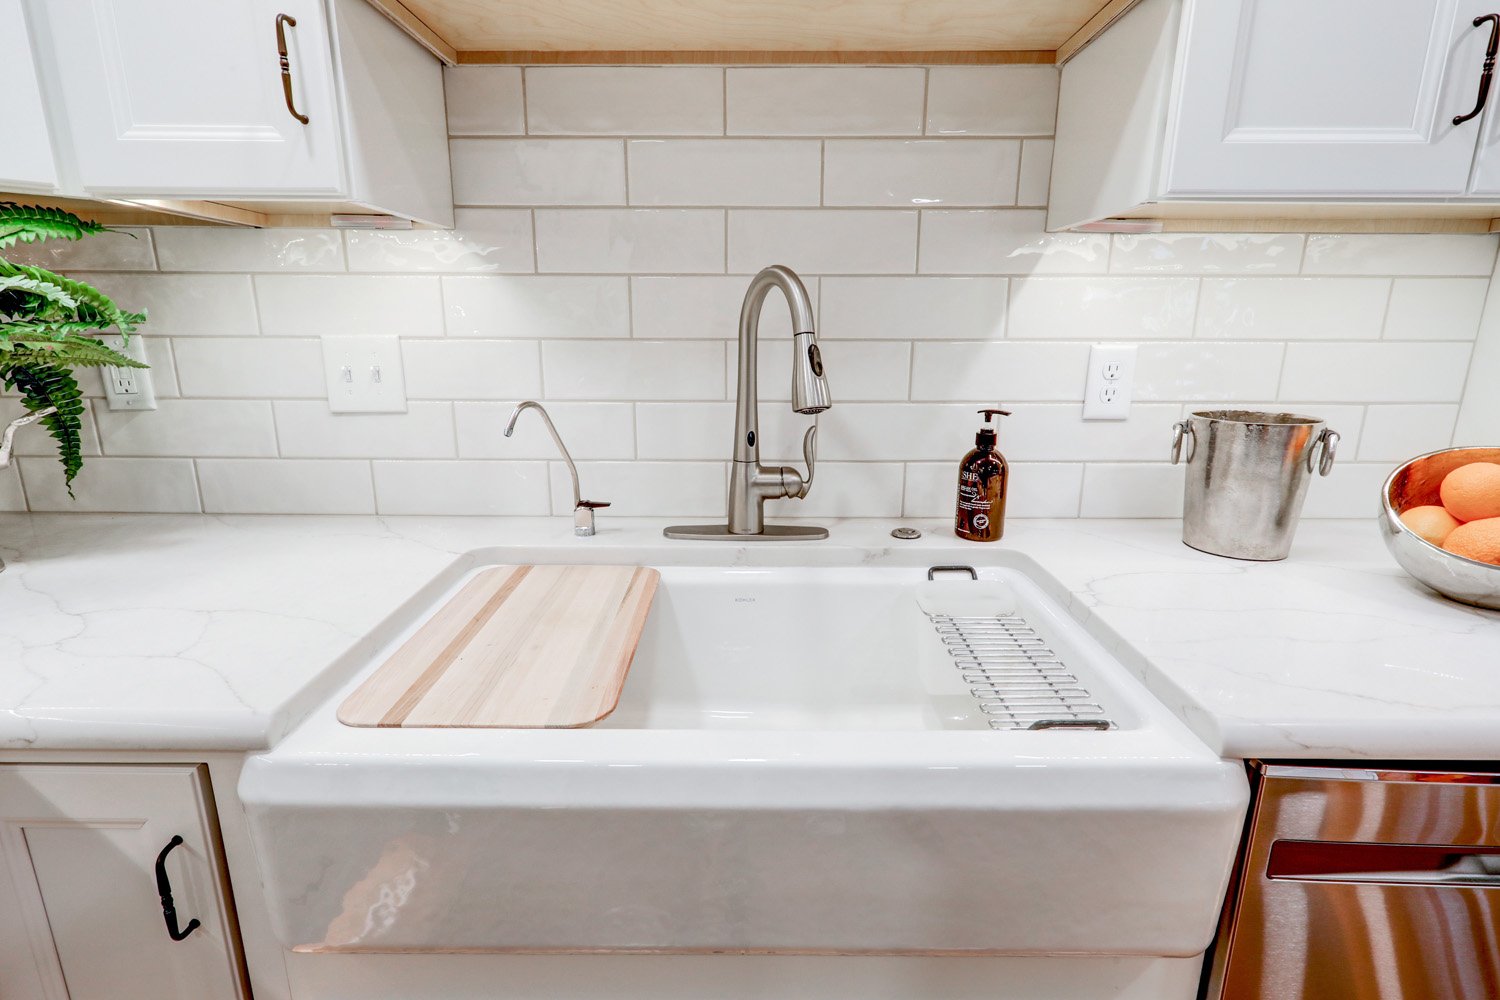 Leola kitchen remodel with porcelain farmhouse sink